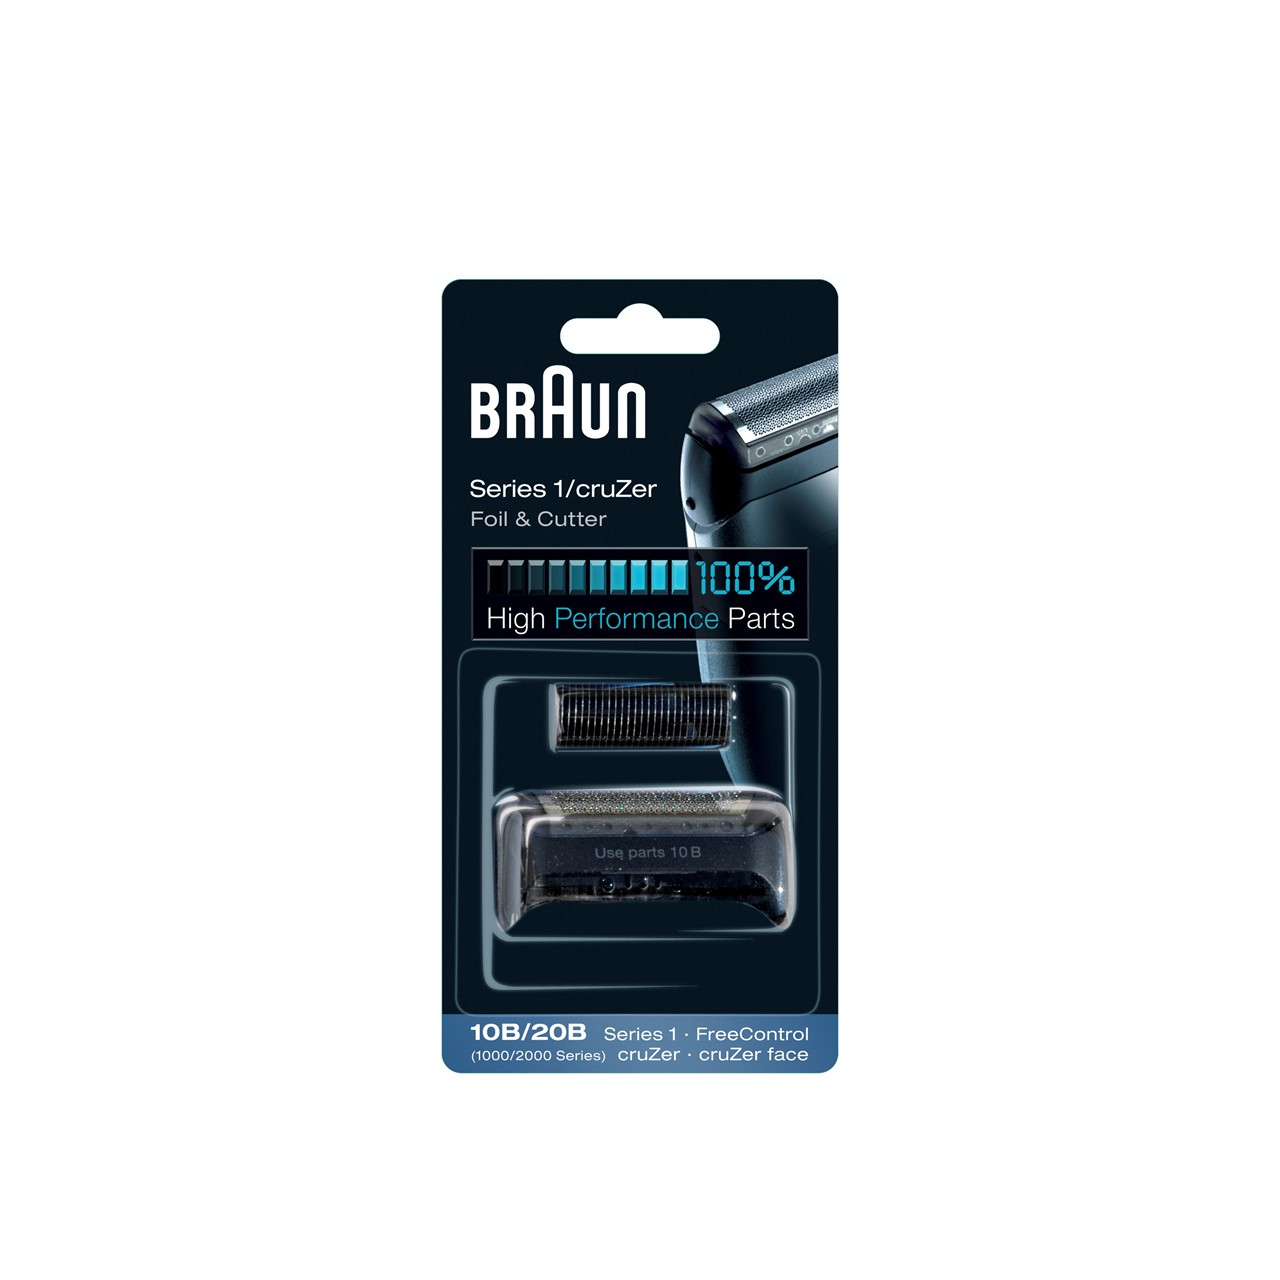 Braun Series 1 Electric Shaver Replacement Foil & Cutter 10B/20B